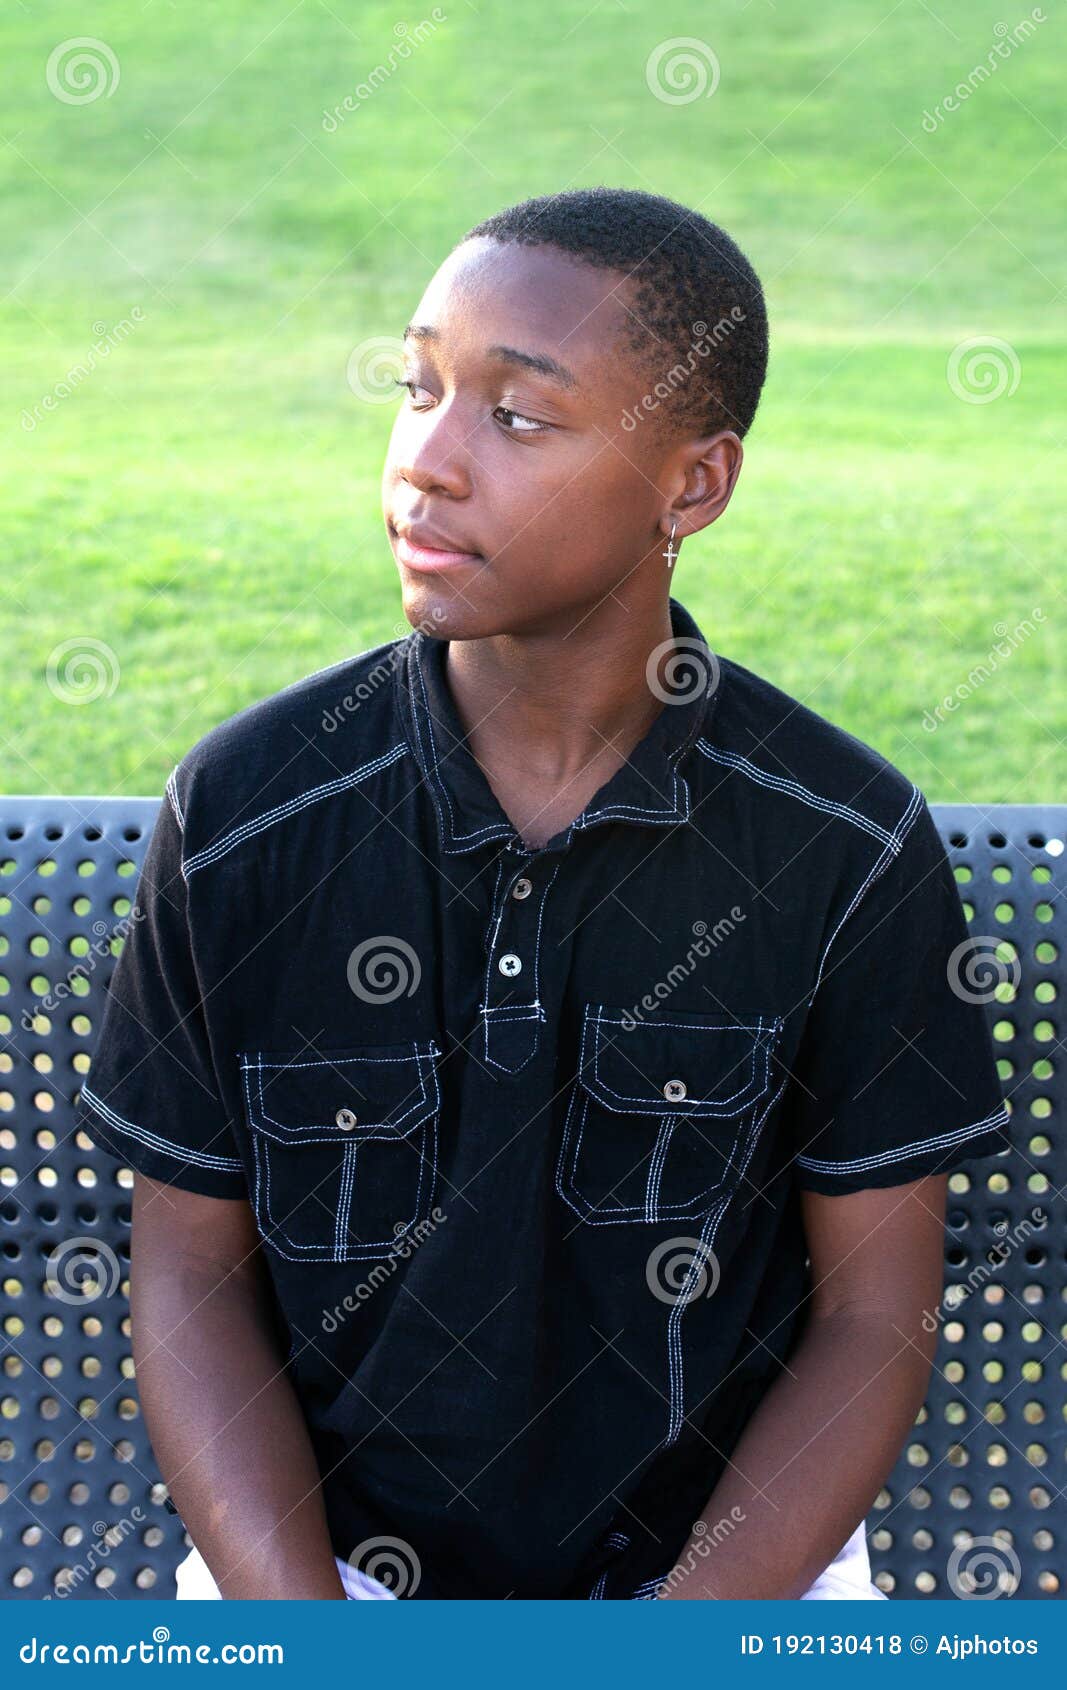 black-teen-boy-looks-to-his-future-african-american-toward-off-camera-192130418.jpg